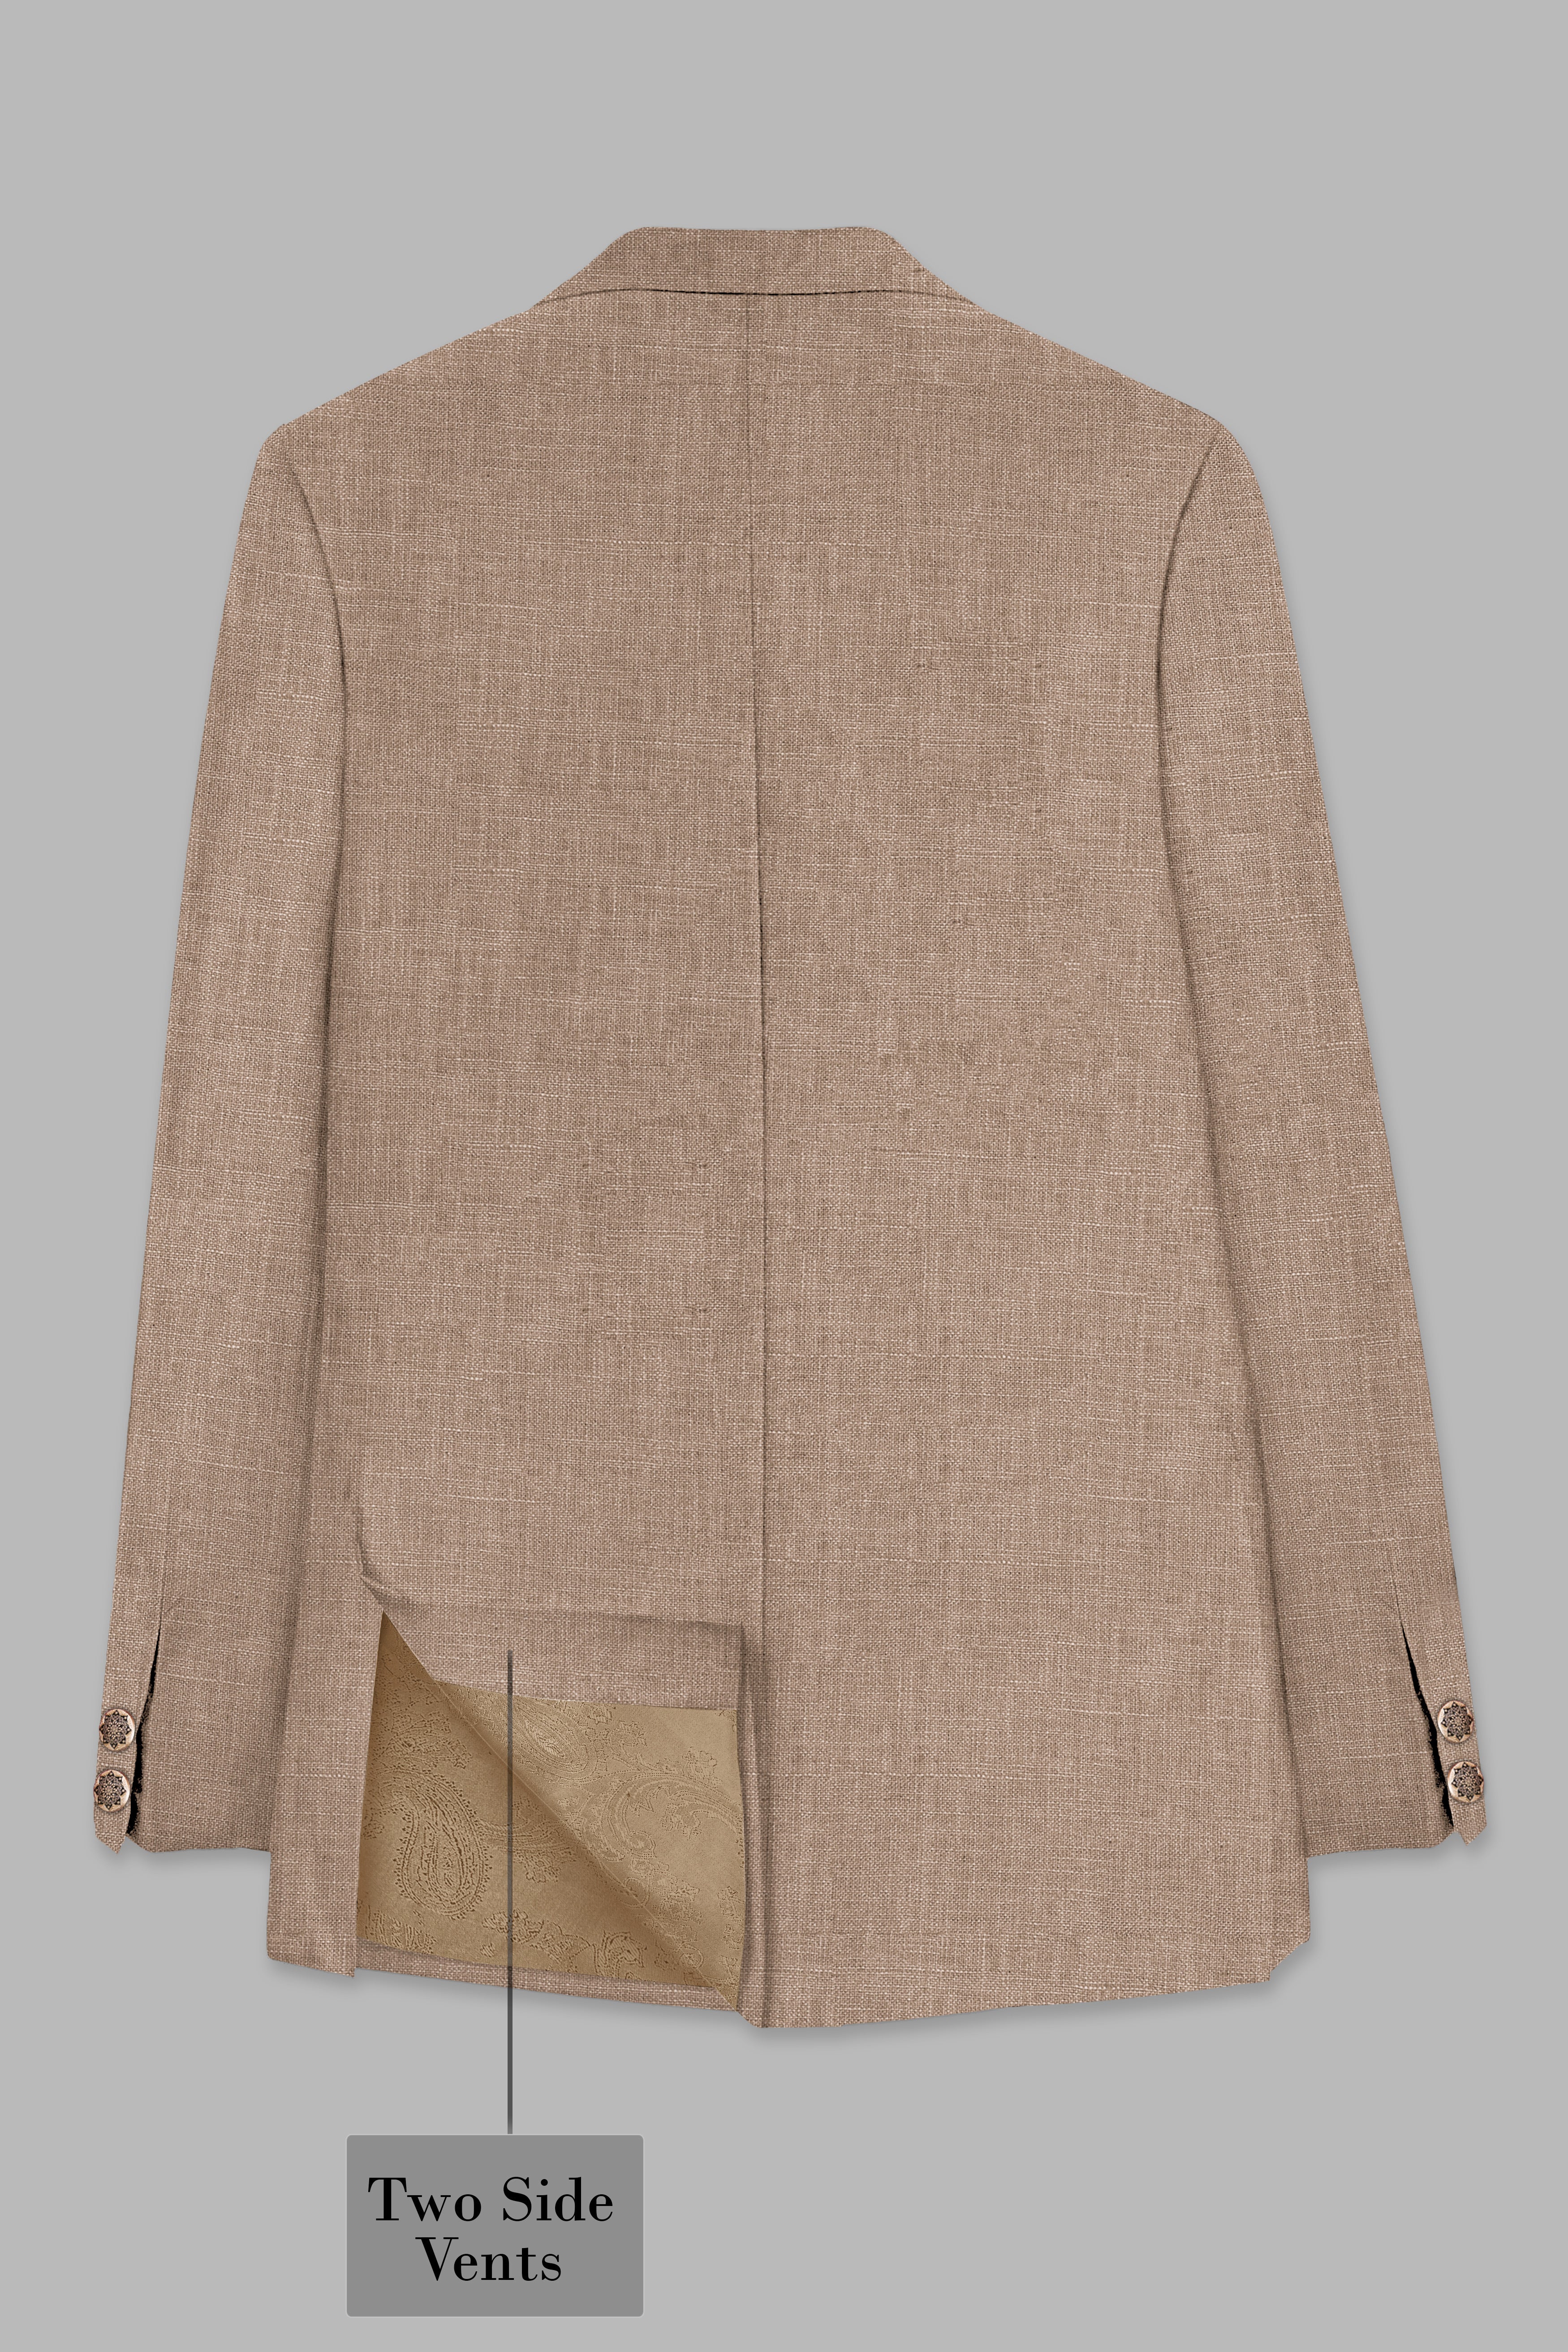 Beaver Brown Cross Placket Bandhgala Luxurious Linen Suit